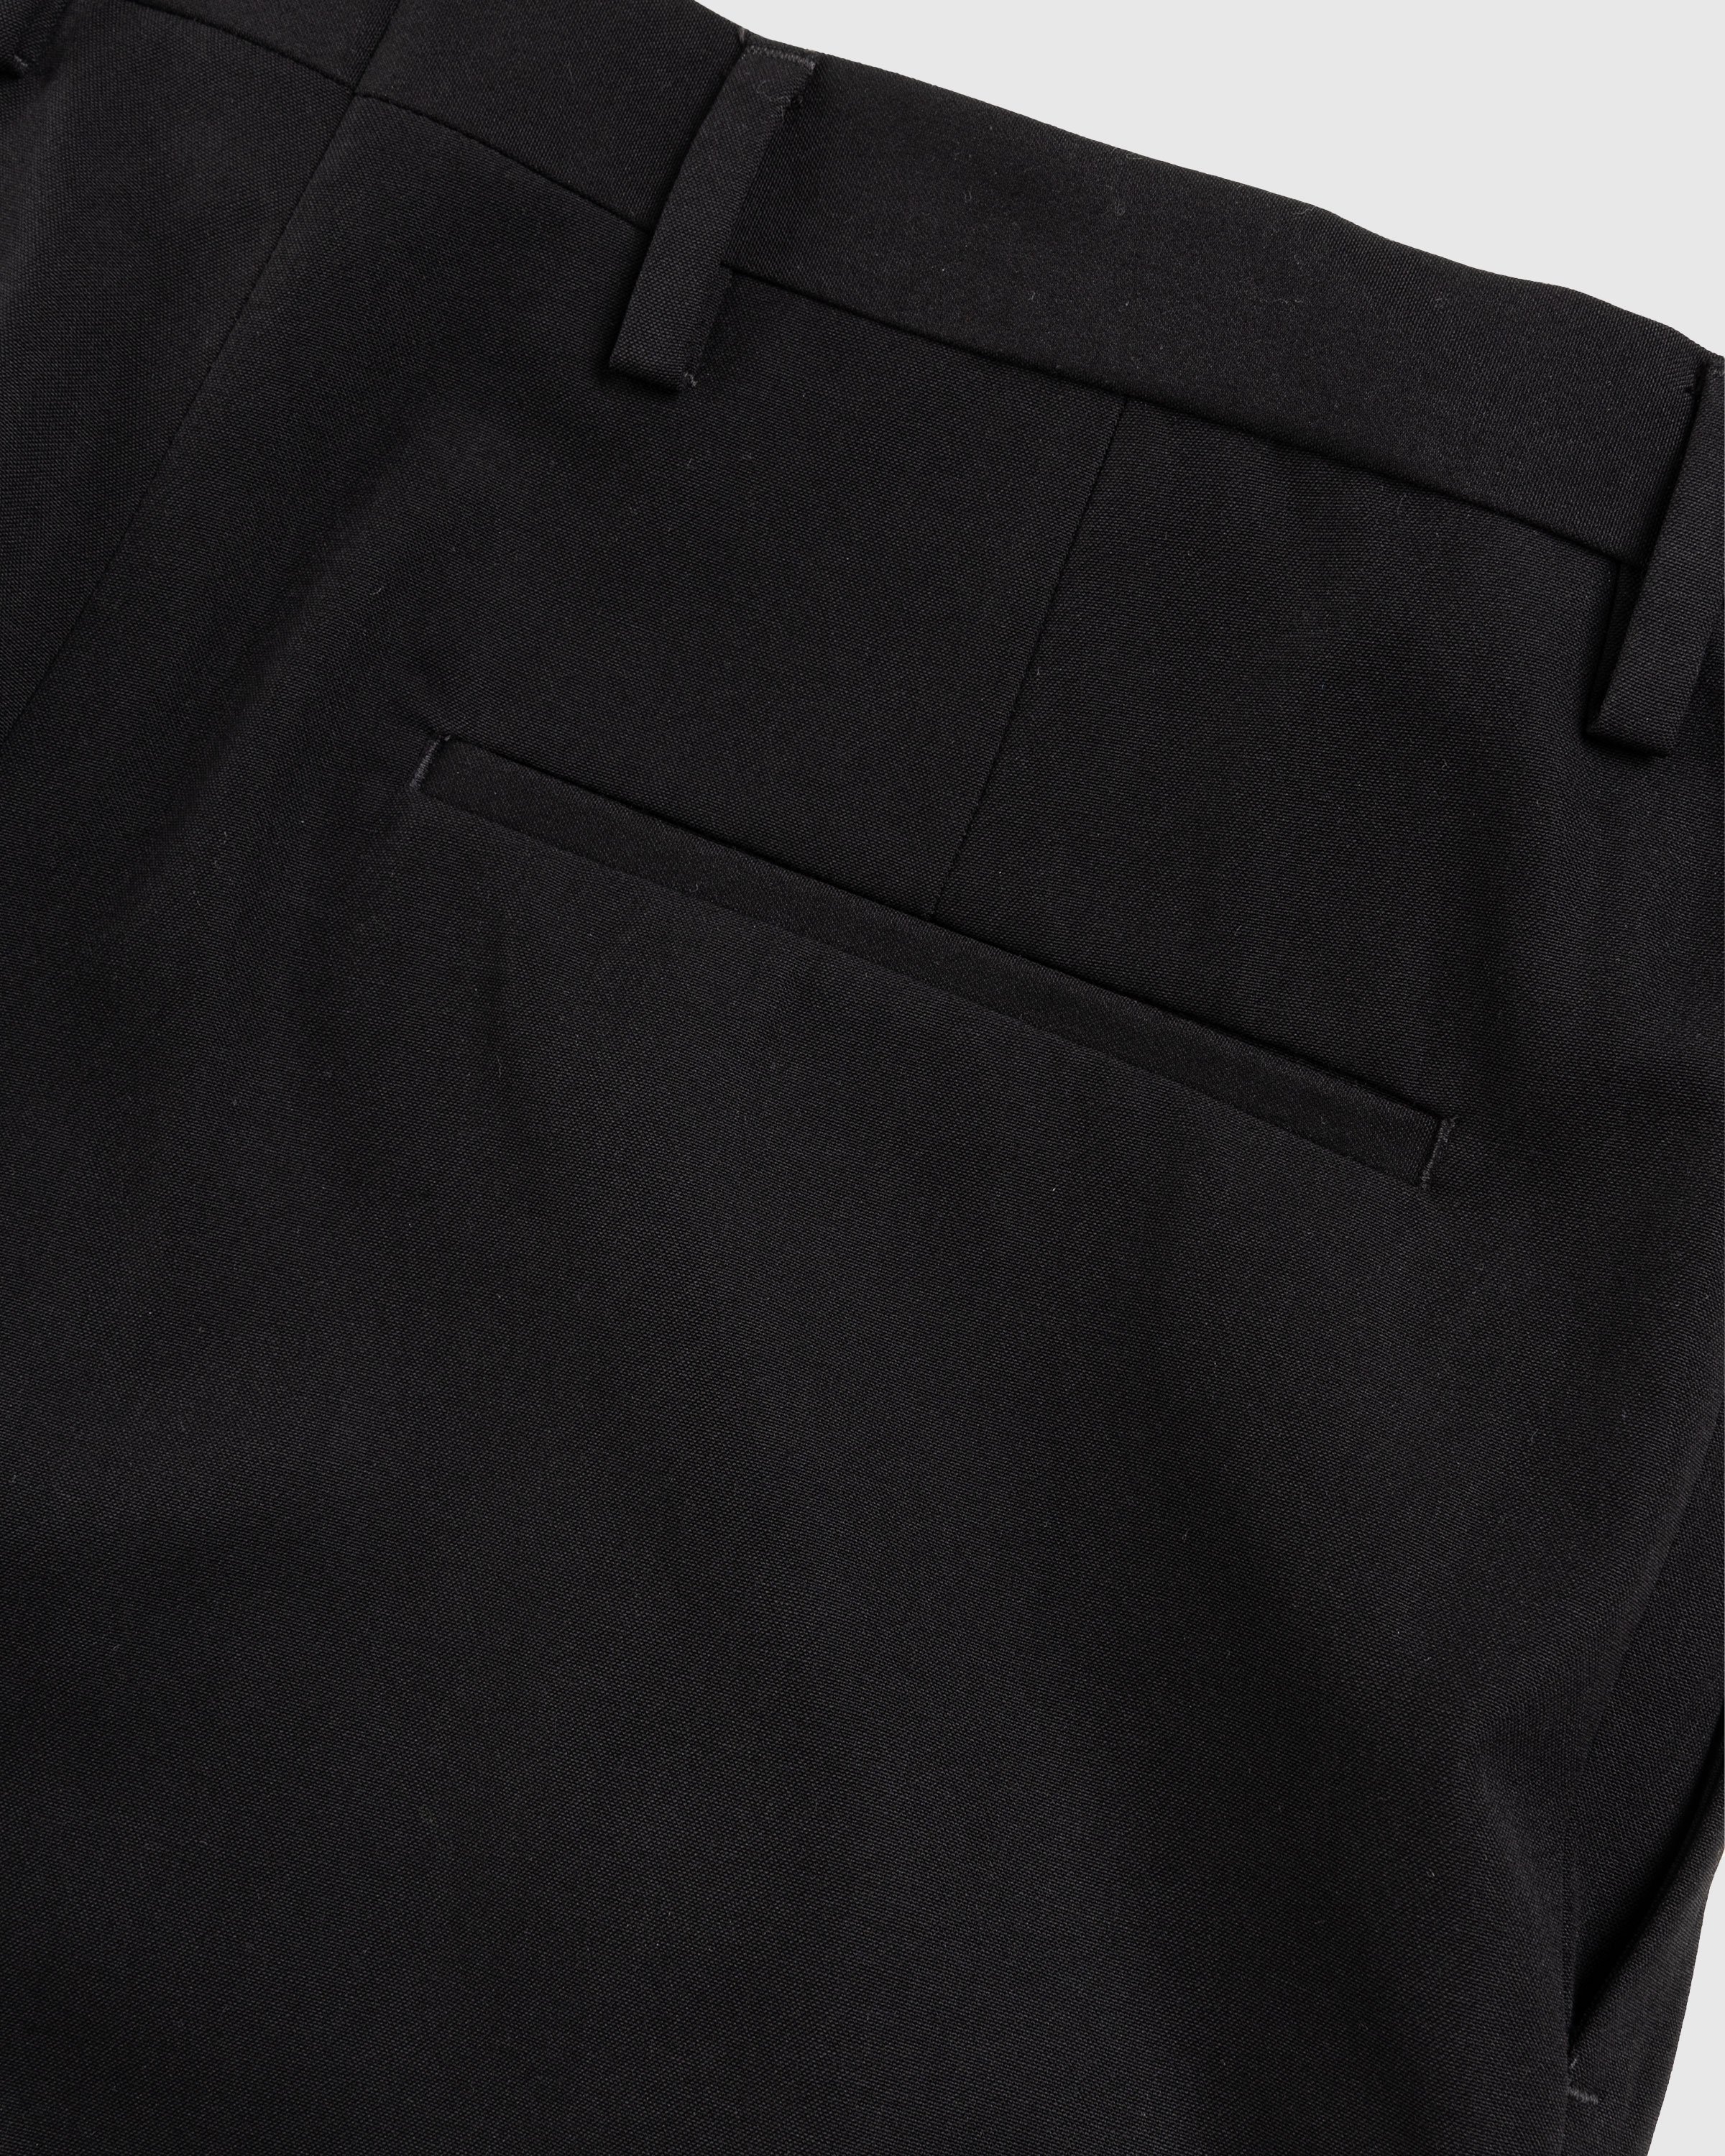 Dries van Noten - Parton Pleated Pants Black - Clothing - Black - Image 5